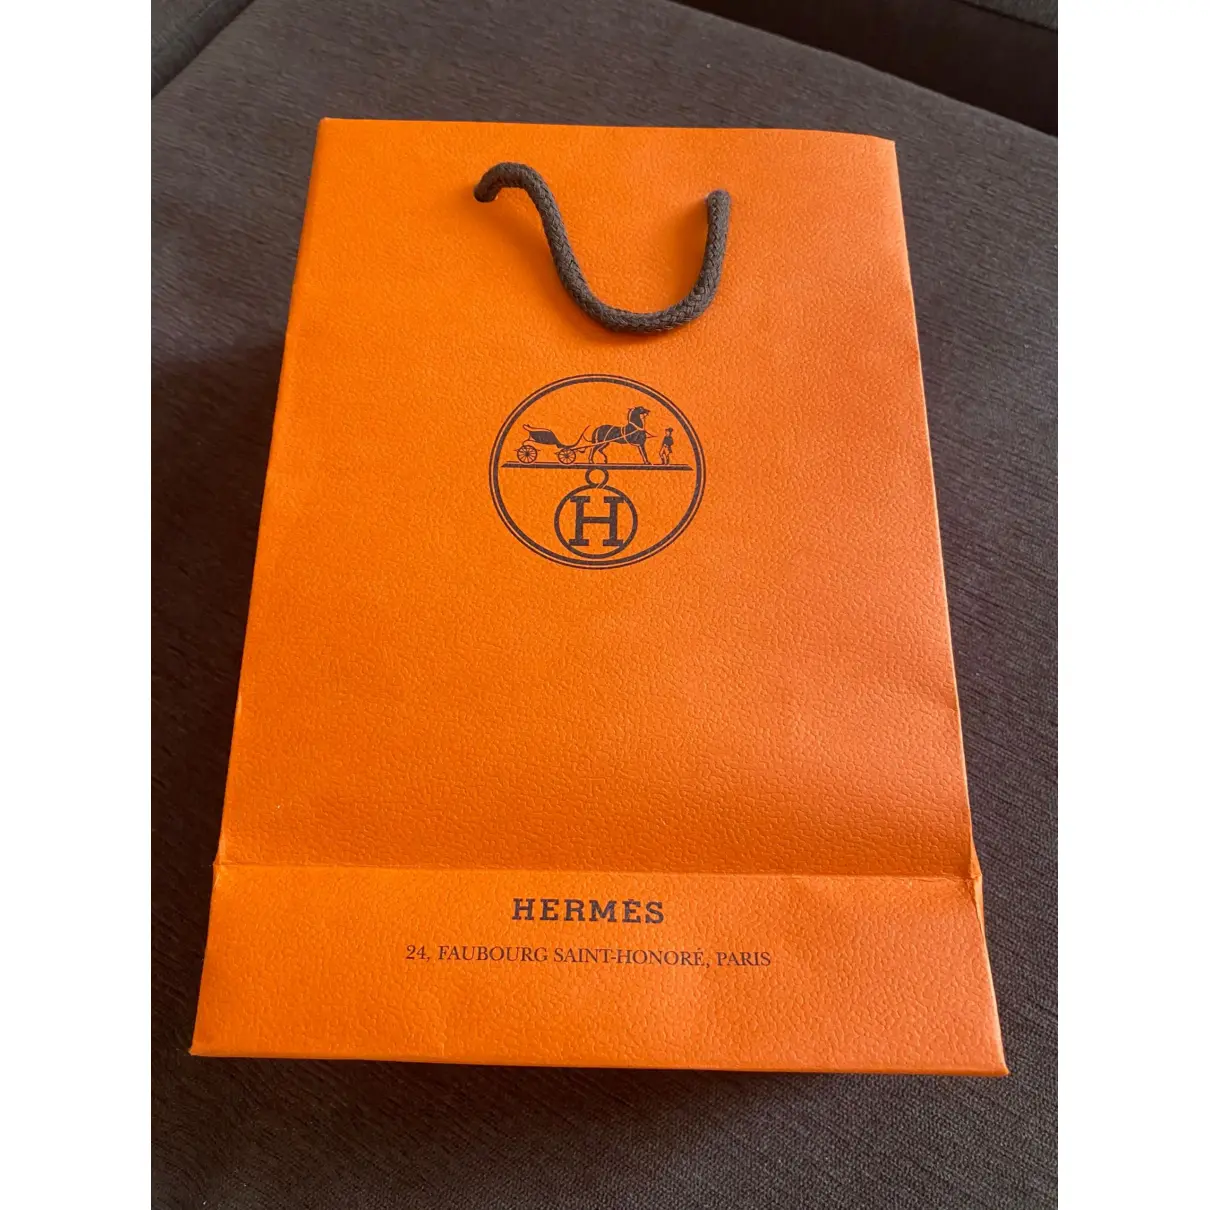 Rodéo Pégase leather bag charm Hermès